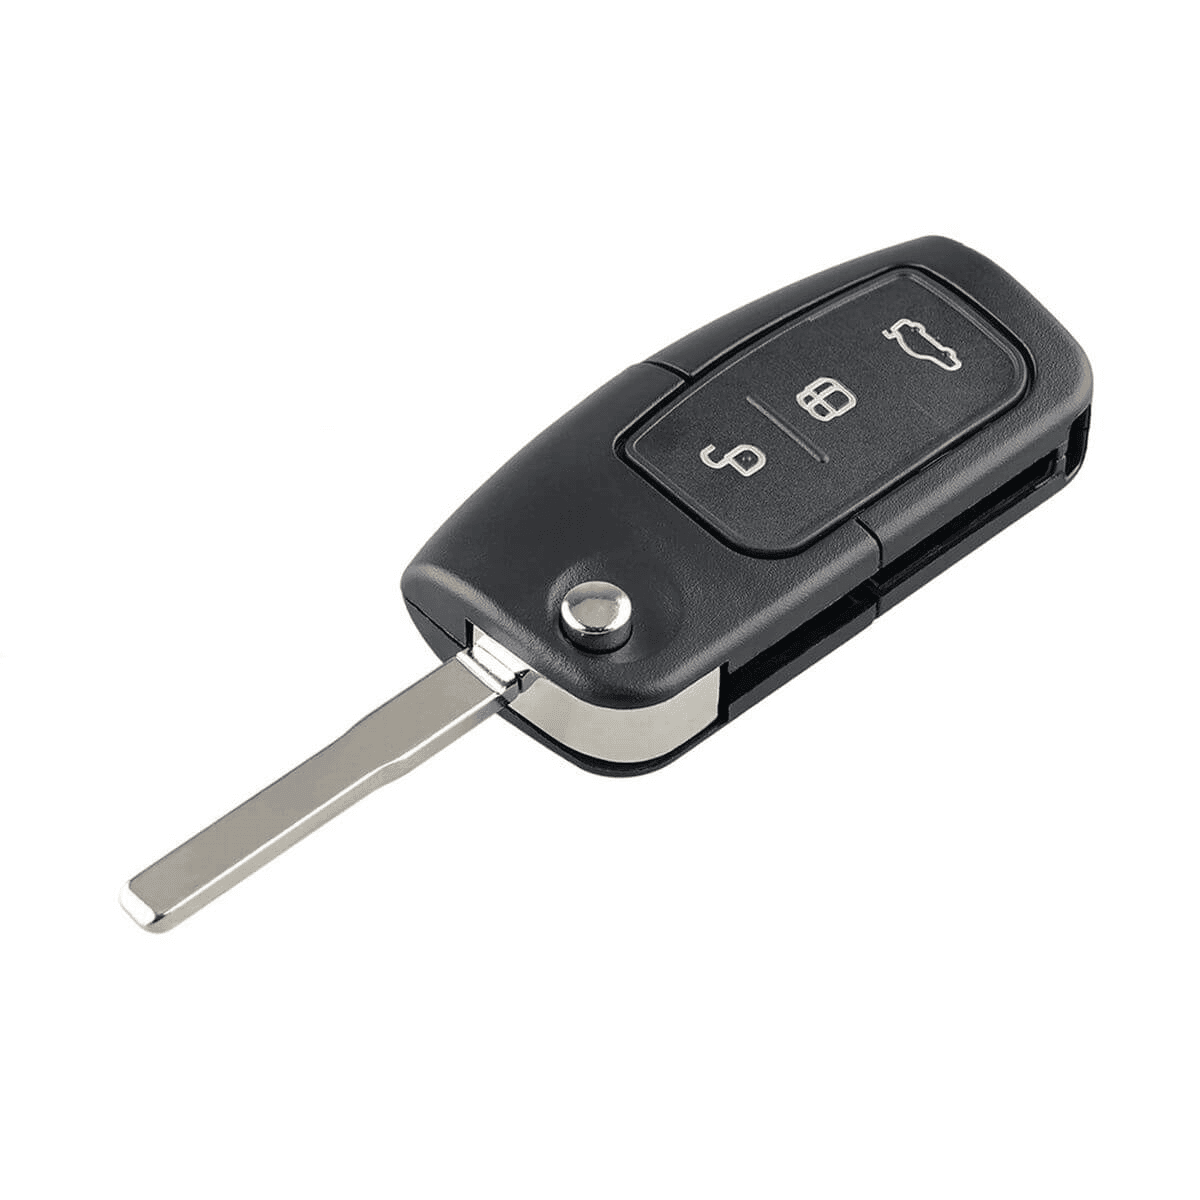 Selected image for CAR ACESSORIES 888 Kućište auto ključa sa 3 tastera za Ford E33-AP000